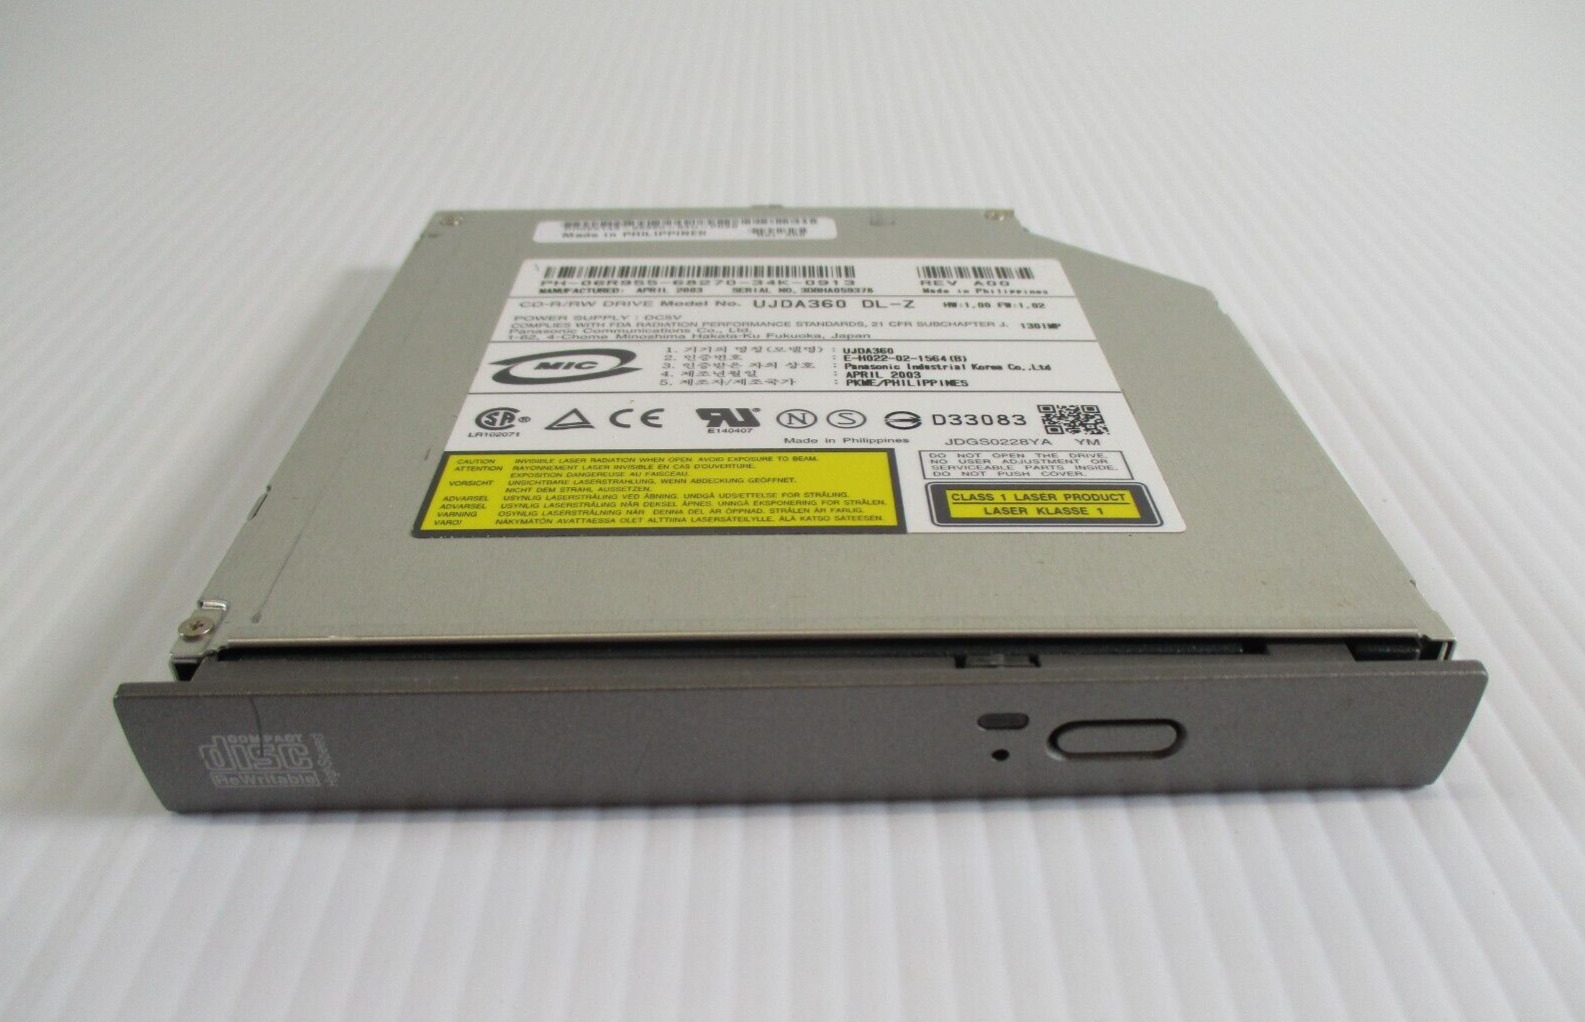 Panasonic CD-R/RW Internal Drive Laser Hi Speed Rewritable  Model UJDA360 DL-Z